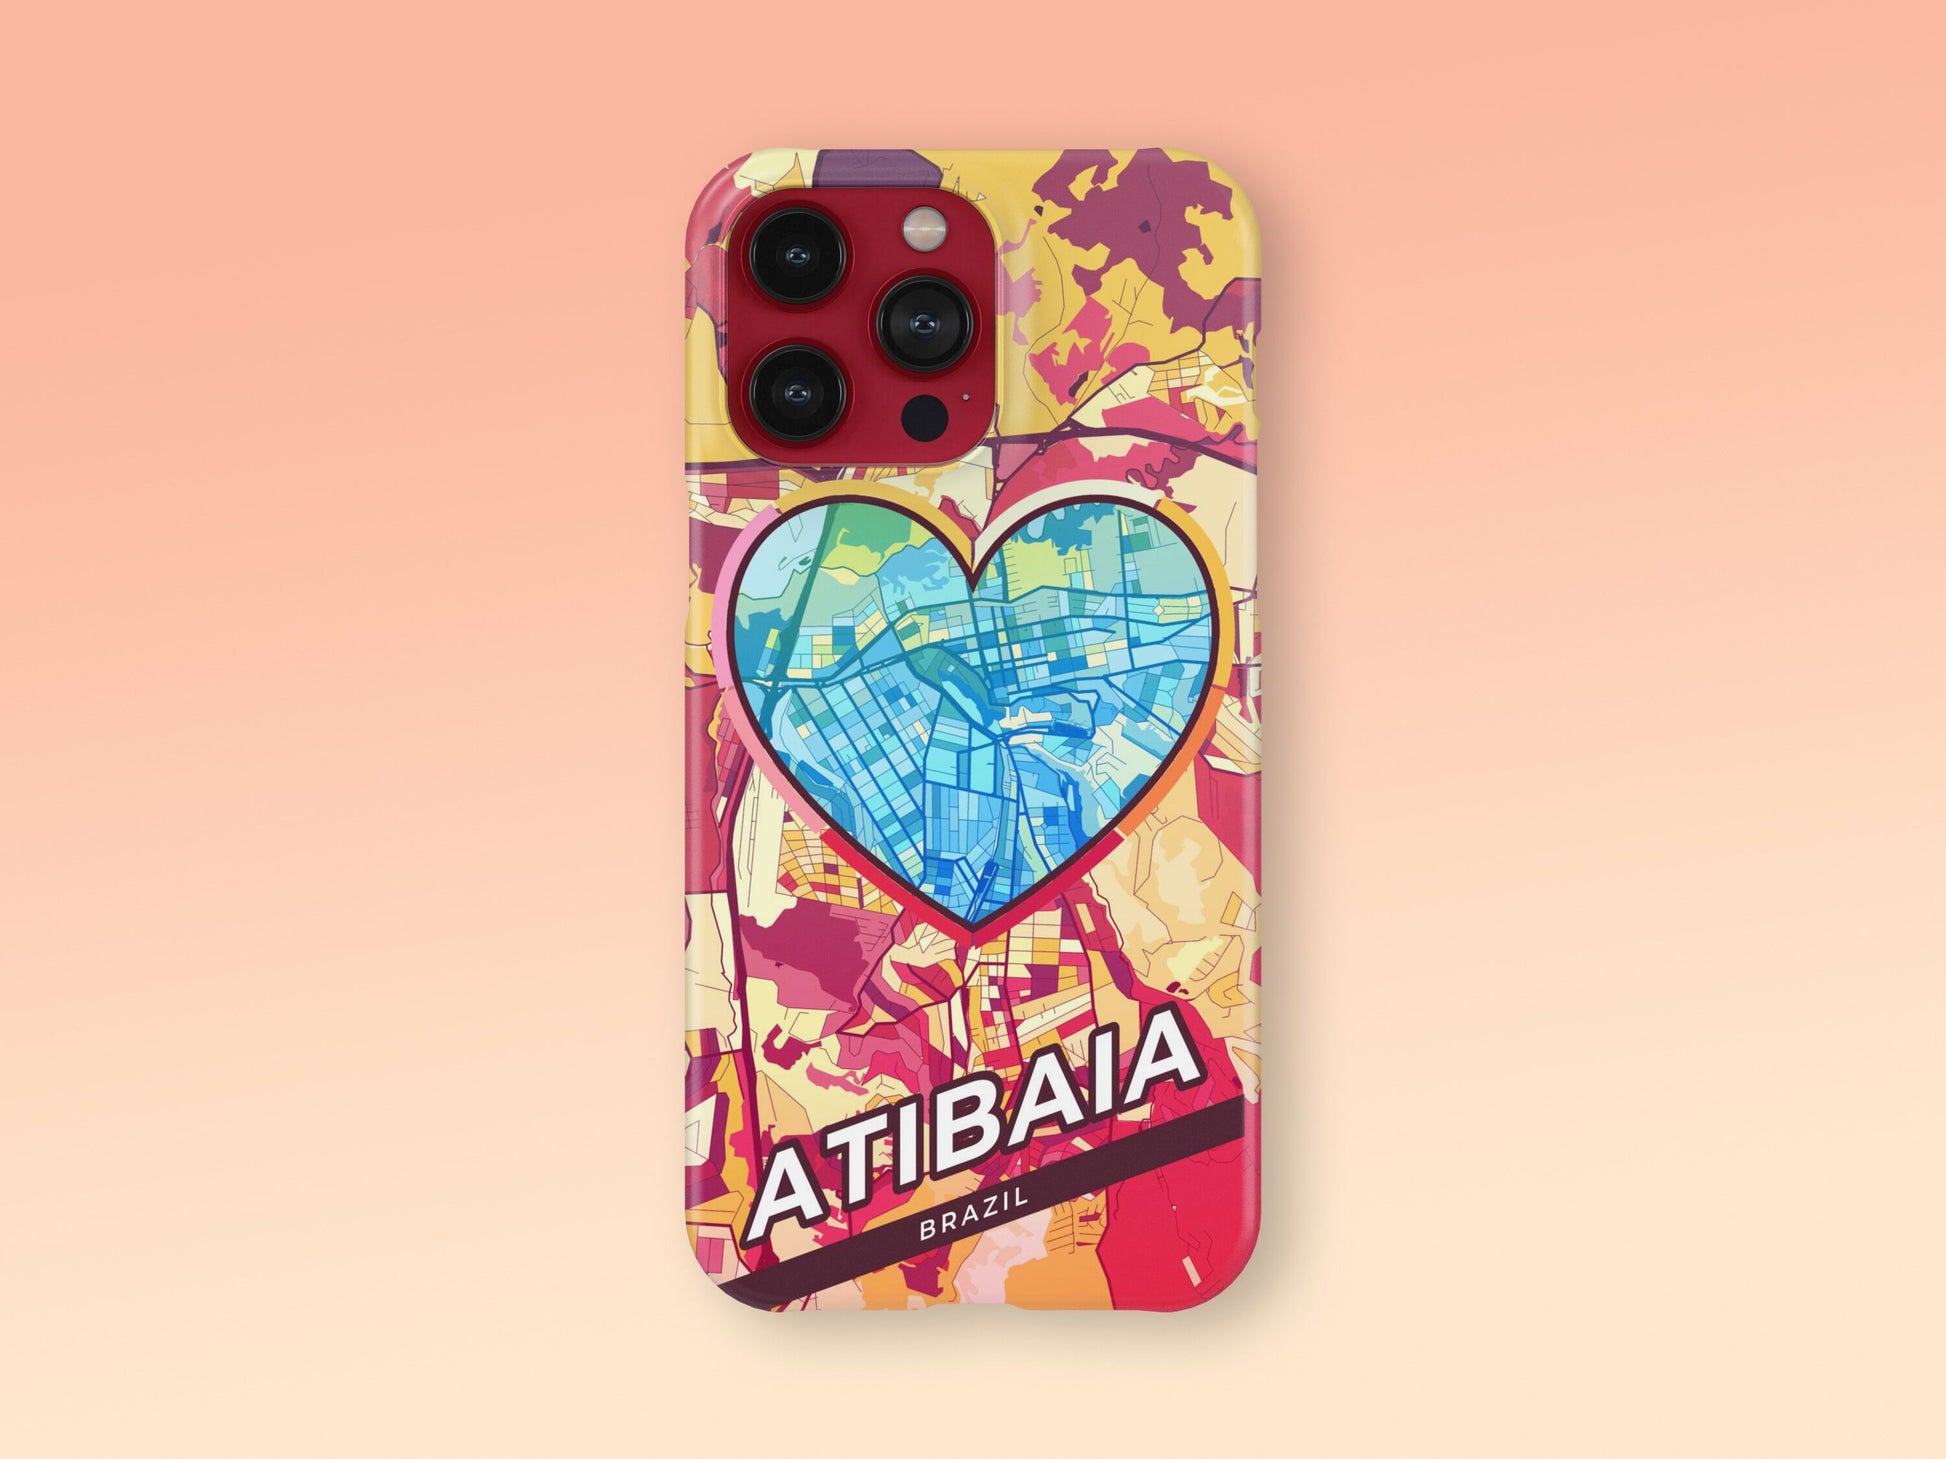 Atibaia Brazil slim phone case with colorful icon. Birthday, wedding or housewarming gift. Couple match cases. 2